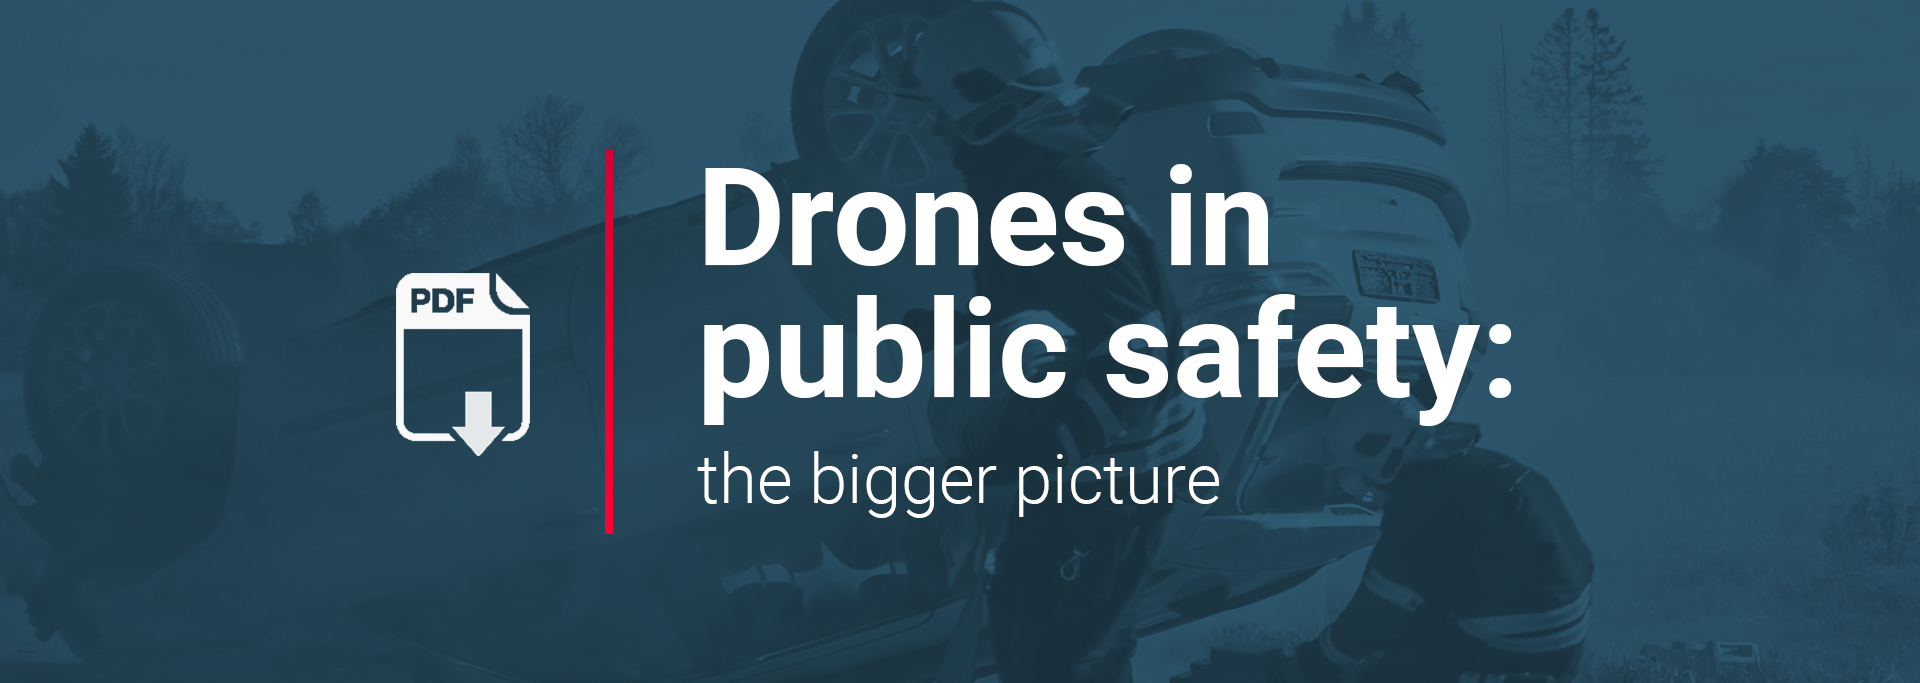 Free ebook: drones in public safey, the bigger picture